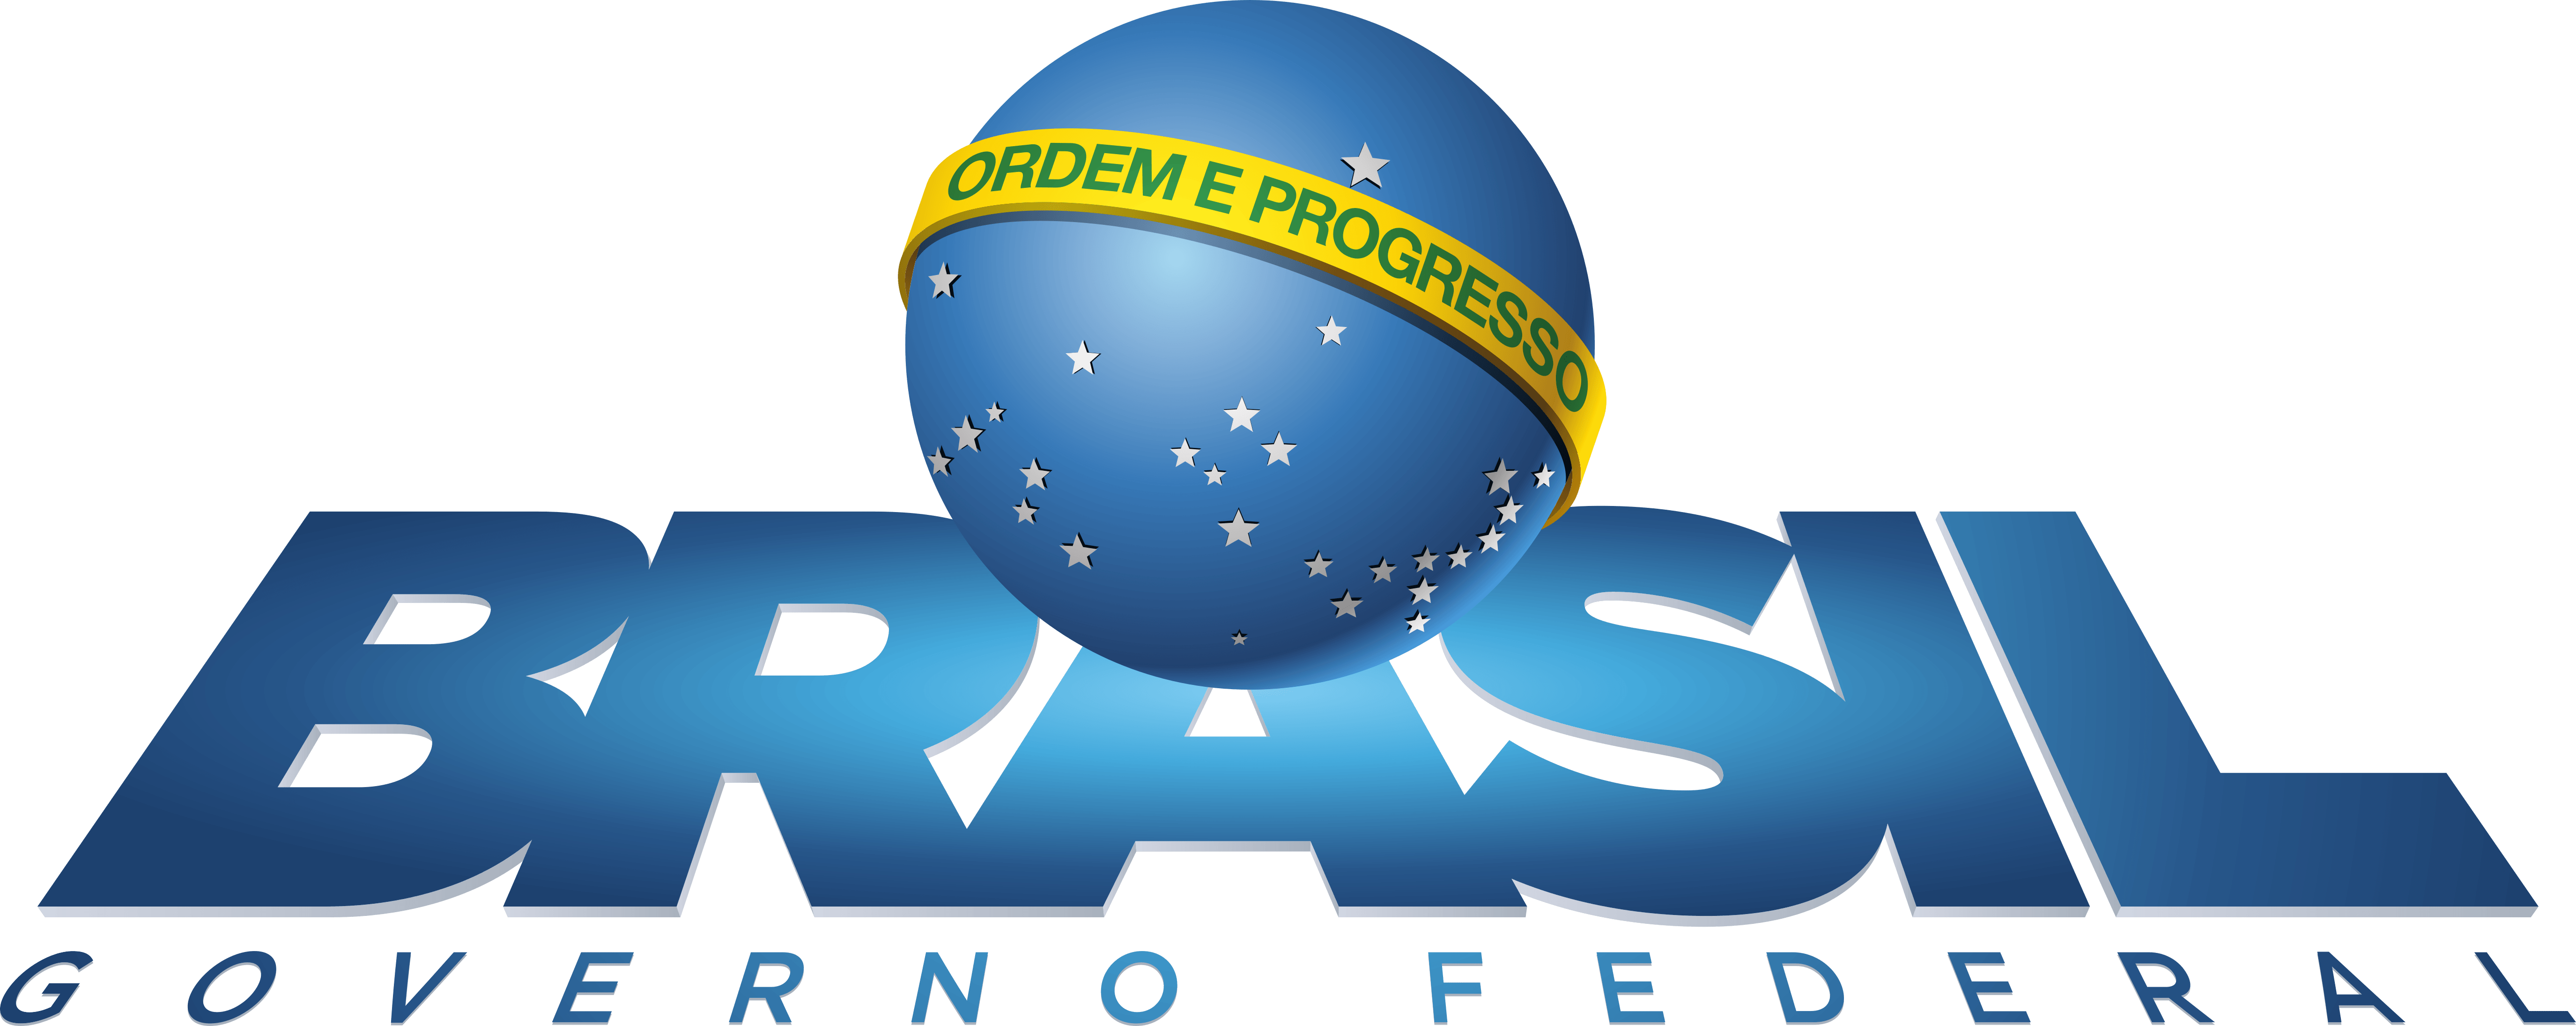 Brasil Logo - File:Governo-federal-logo-novo-temer-grande.png